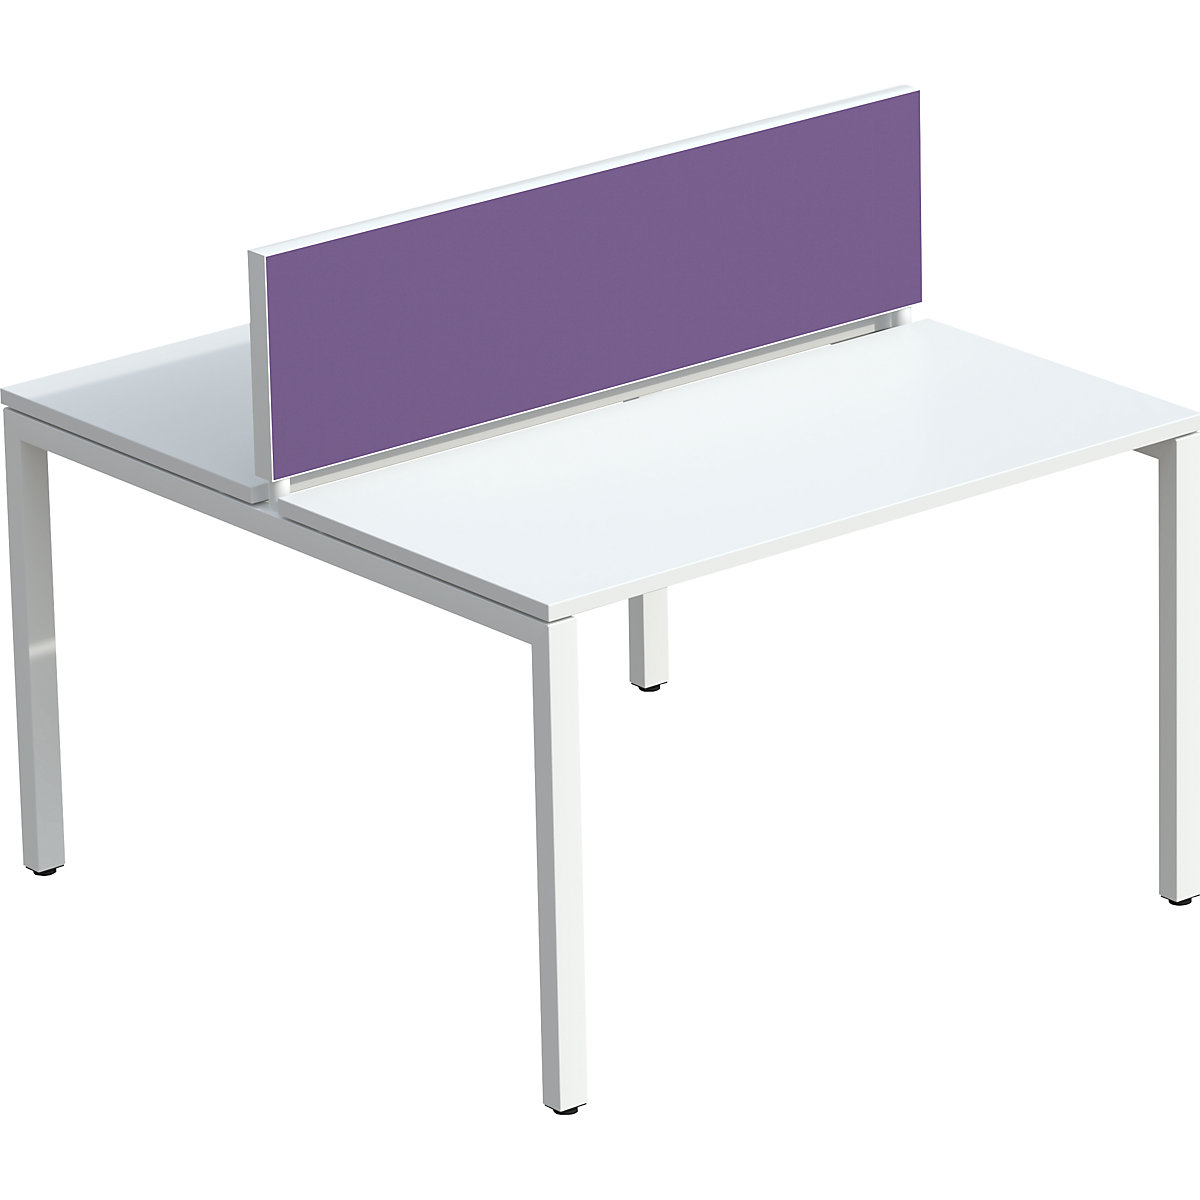 Table partition for team desks (Product illustration 2)-1